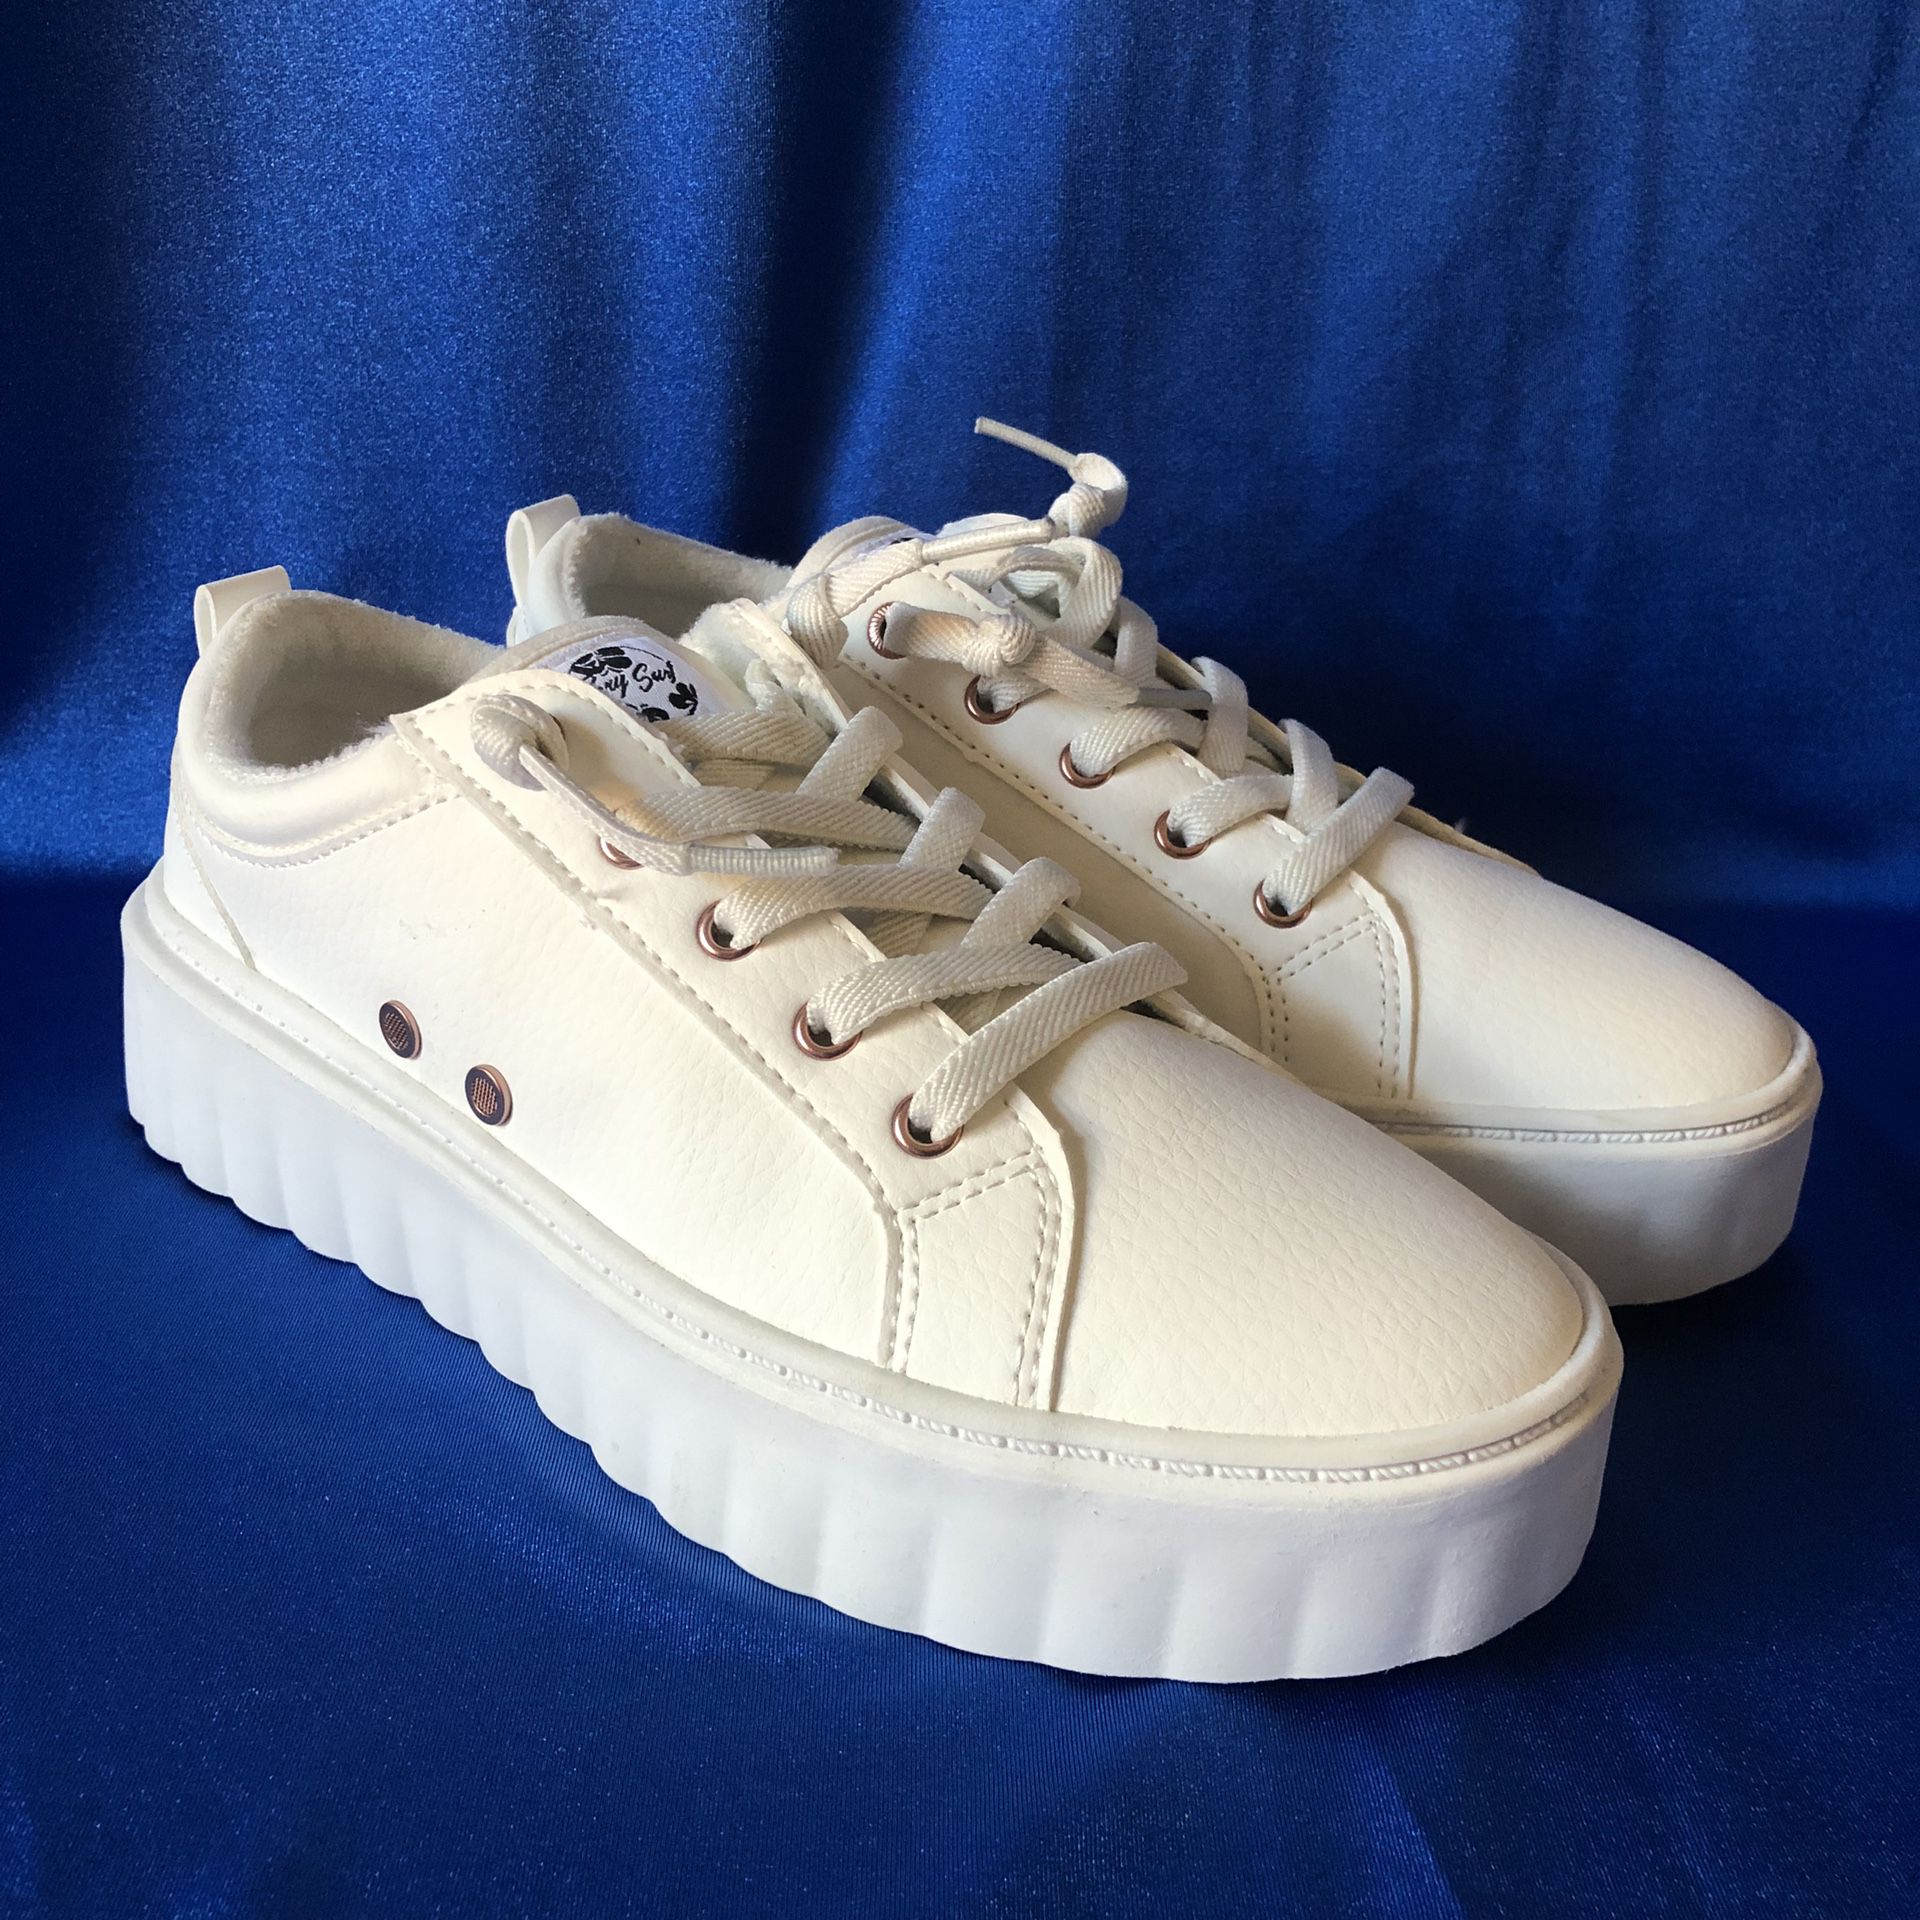 White Roxy Shoes - Size 7